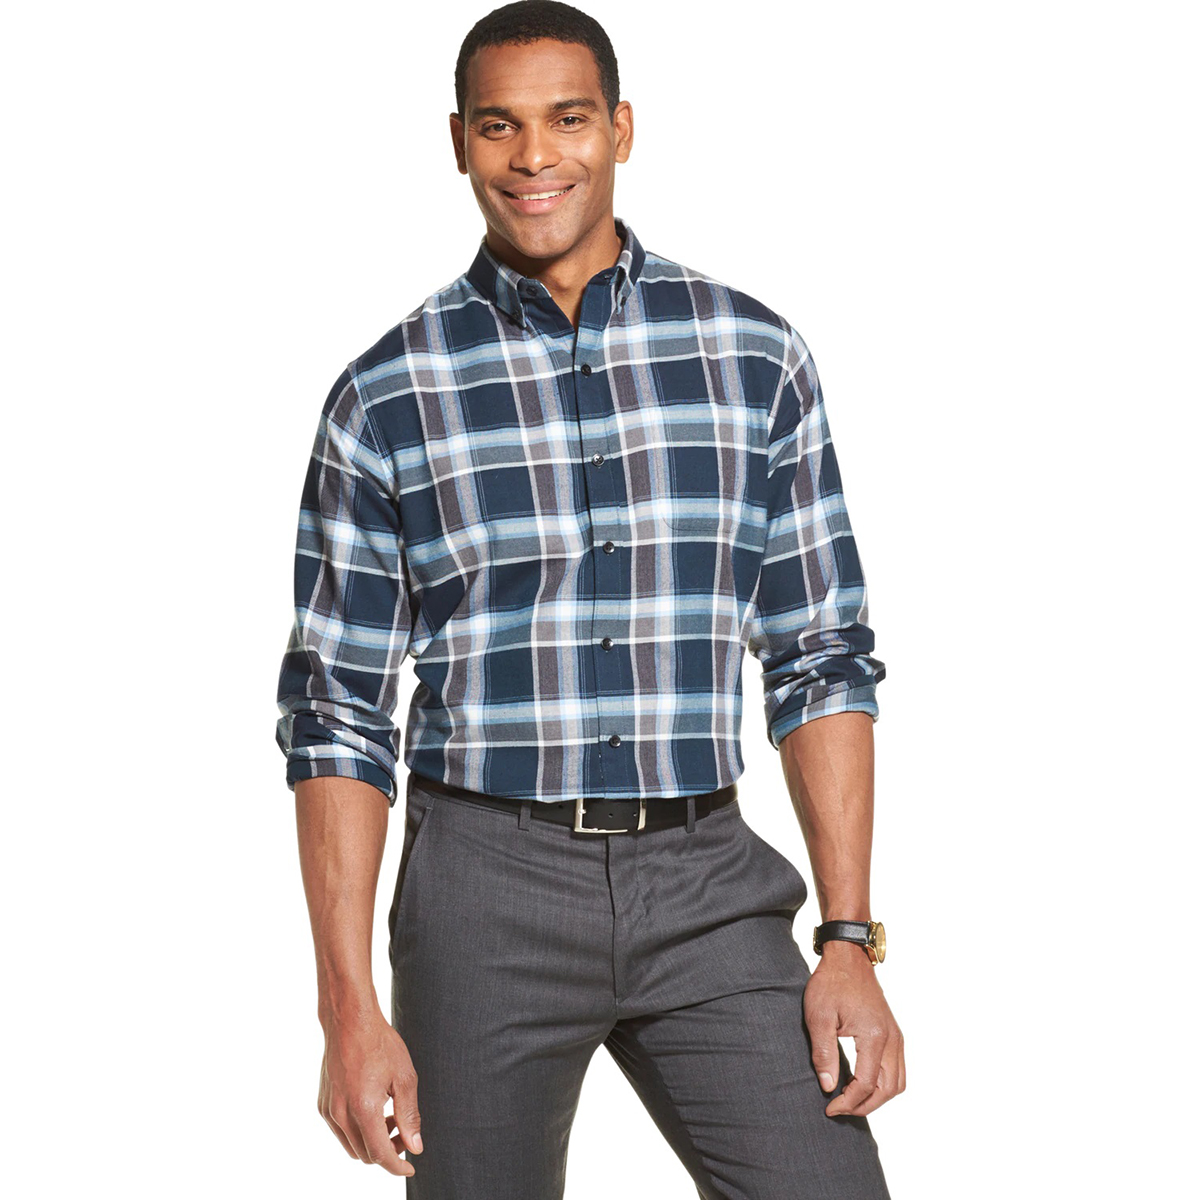 Van Heusen Men's Long-Sleeve Non Iron Plaid Button Down Shirt - Blue, XL